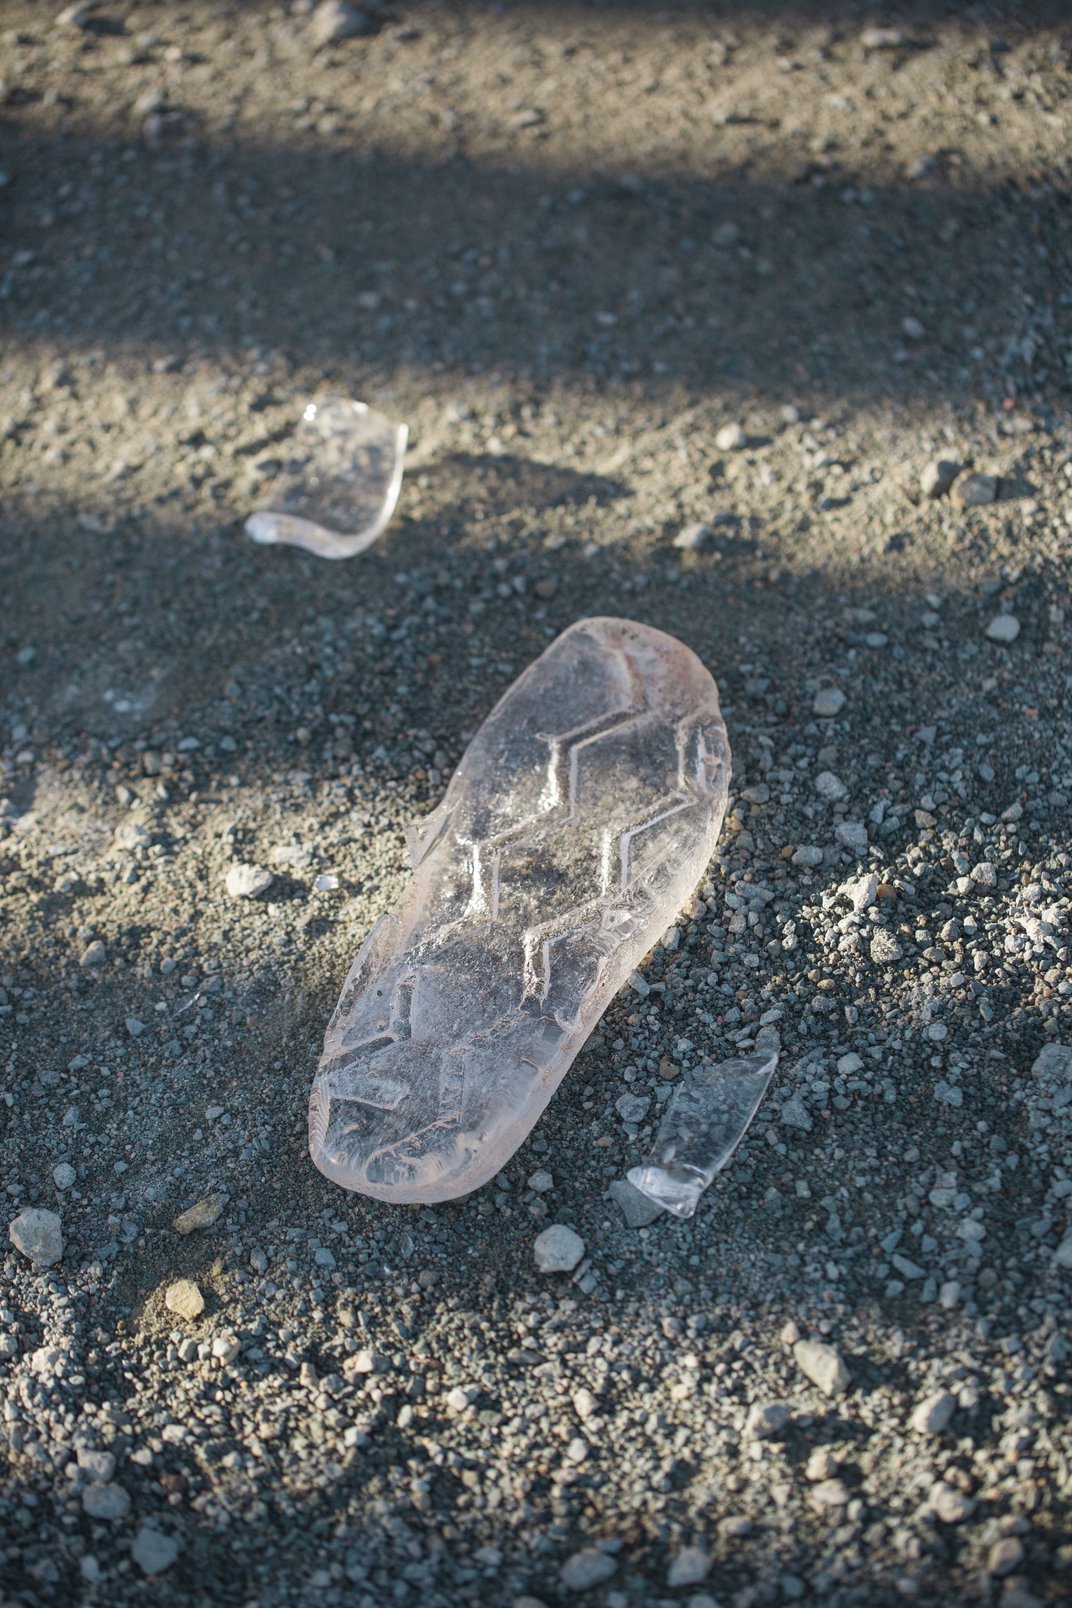 Artist Tanya Aguiniga's broken, glass huarache shoe